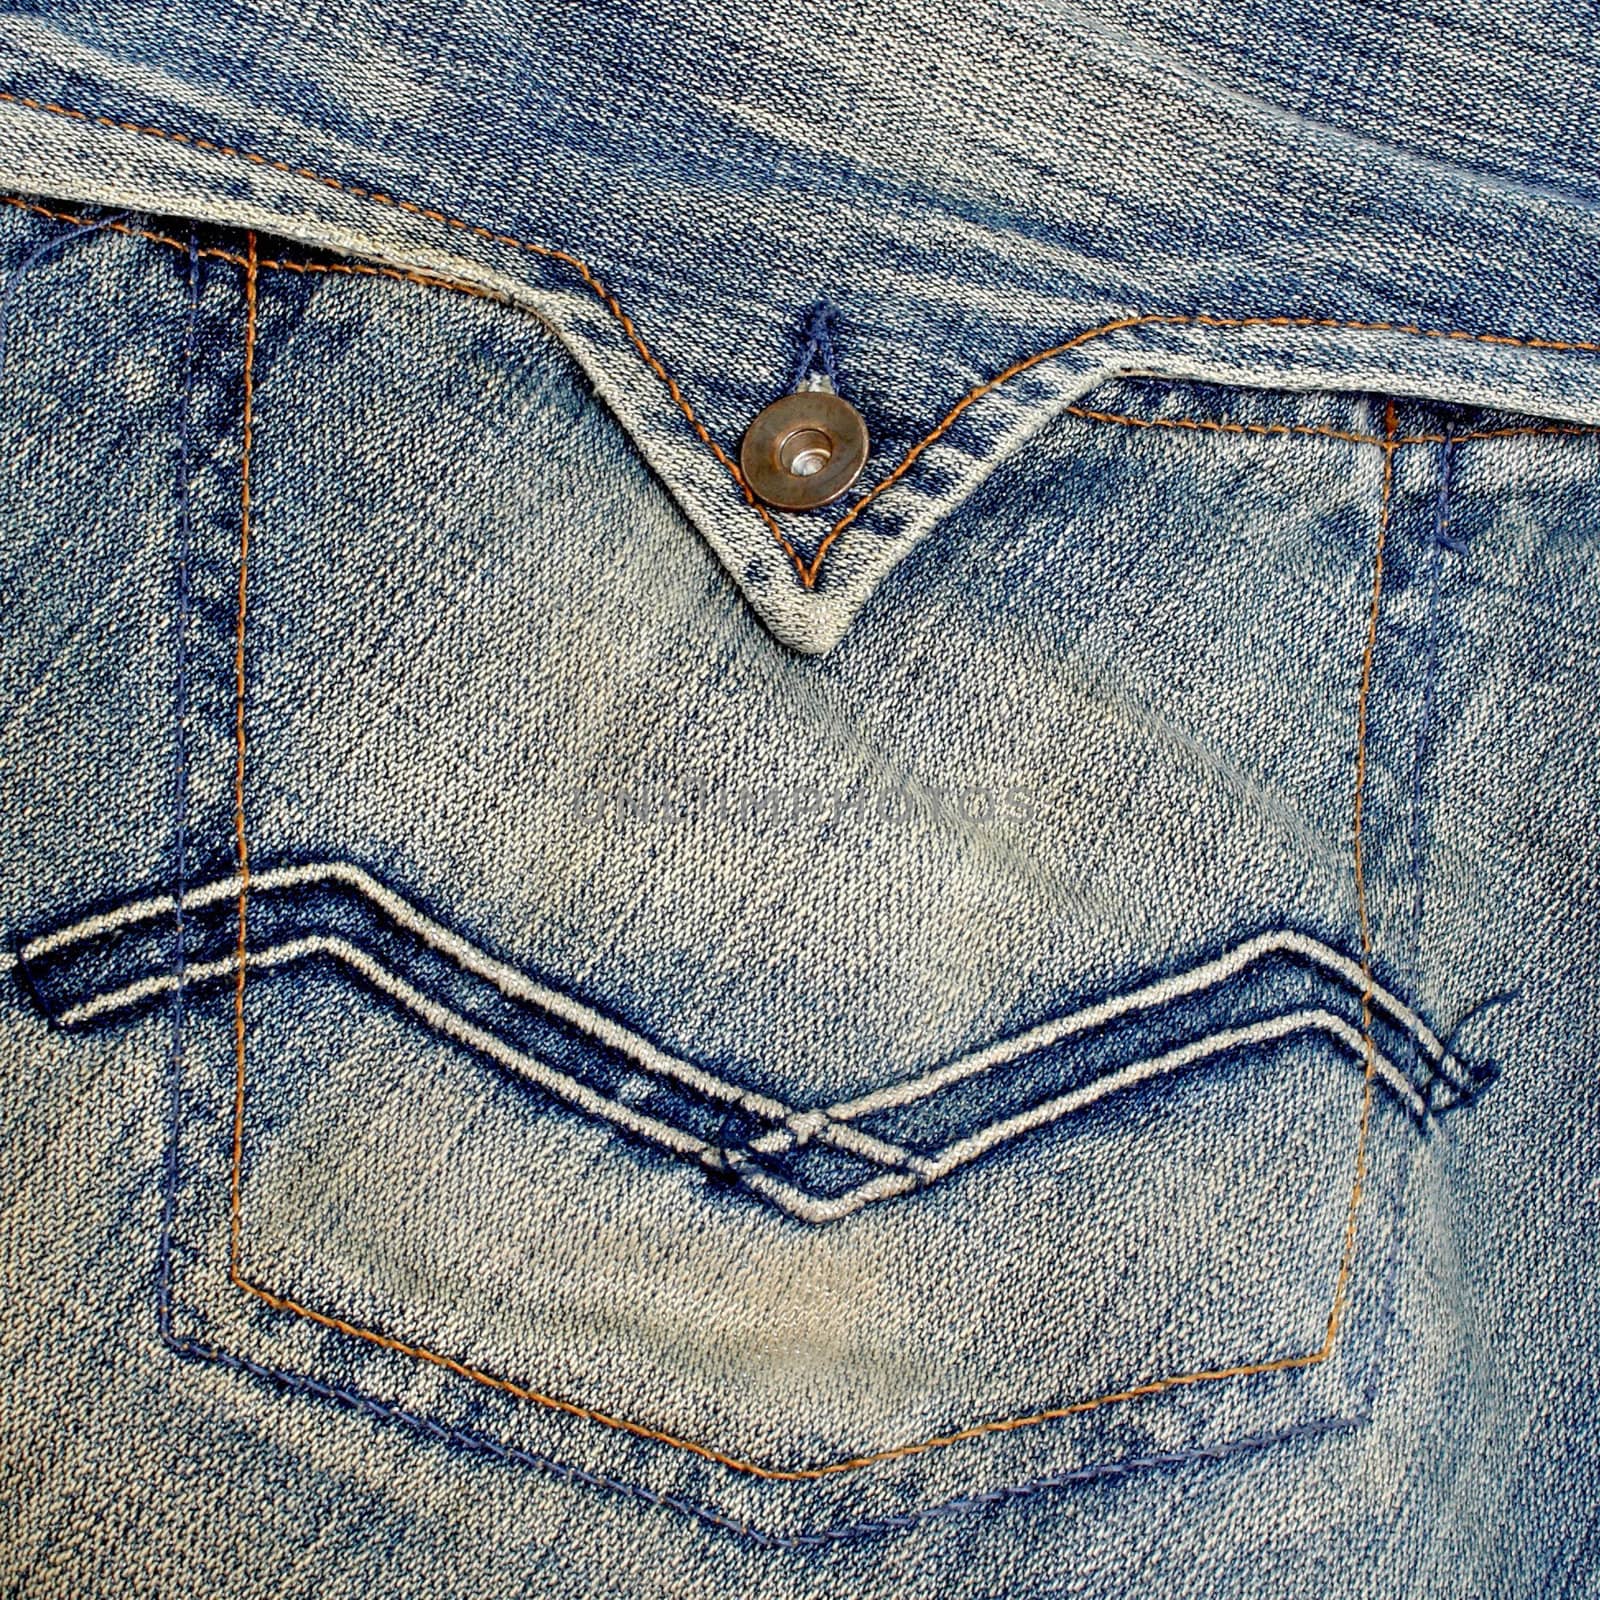 closeup of blue jeans pocket